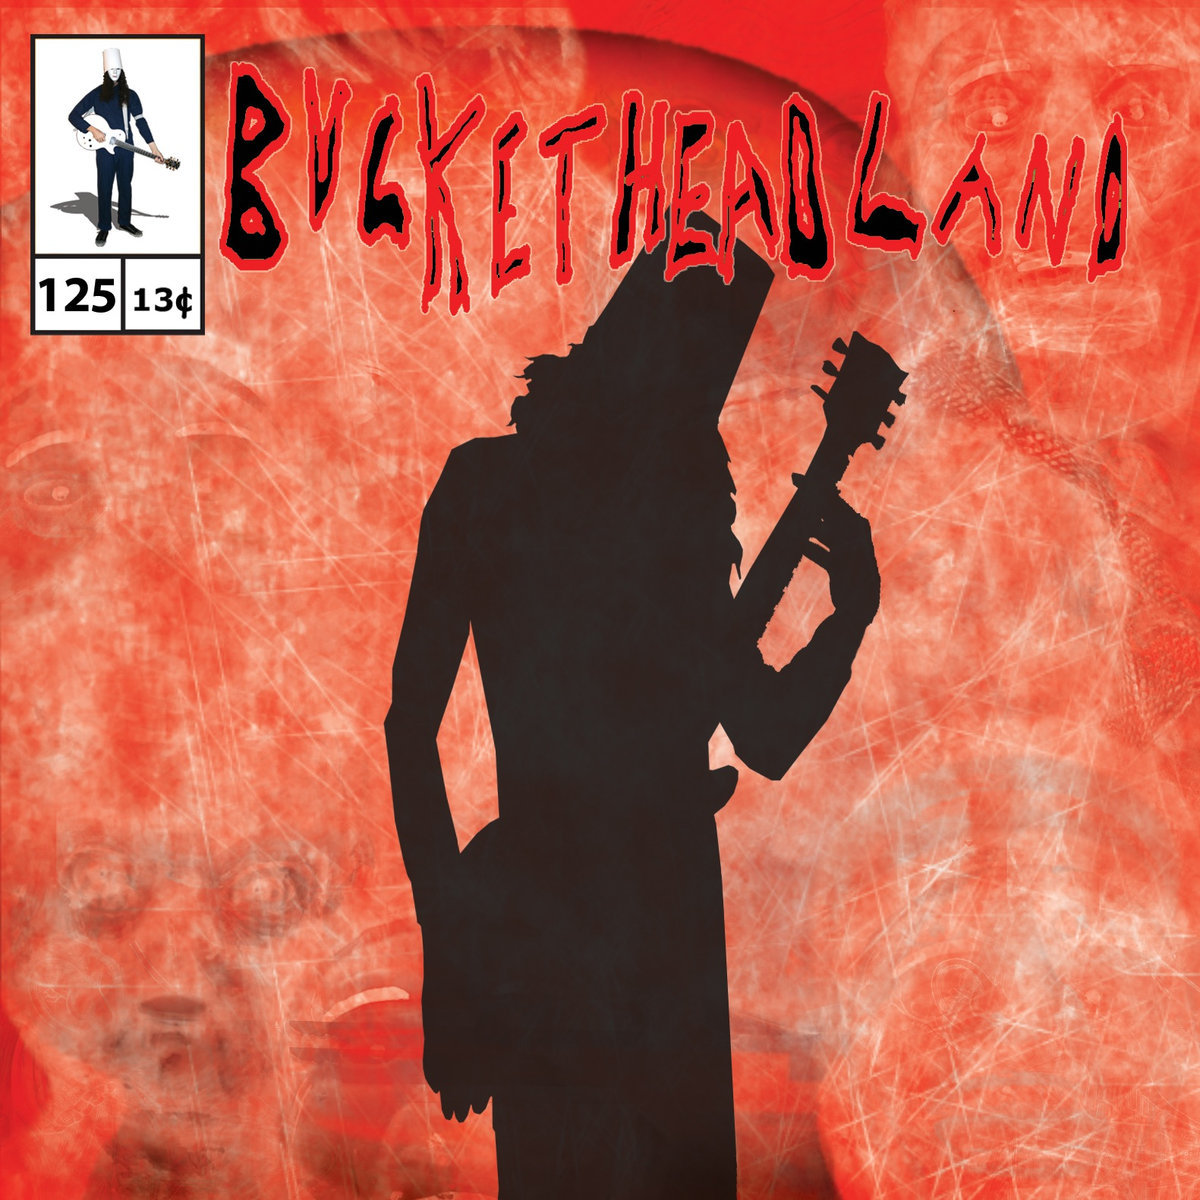 Buckethead - Pike 125: Along The River Bank (2015)